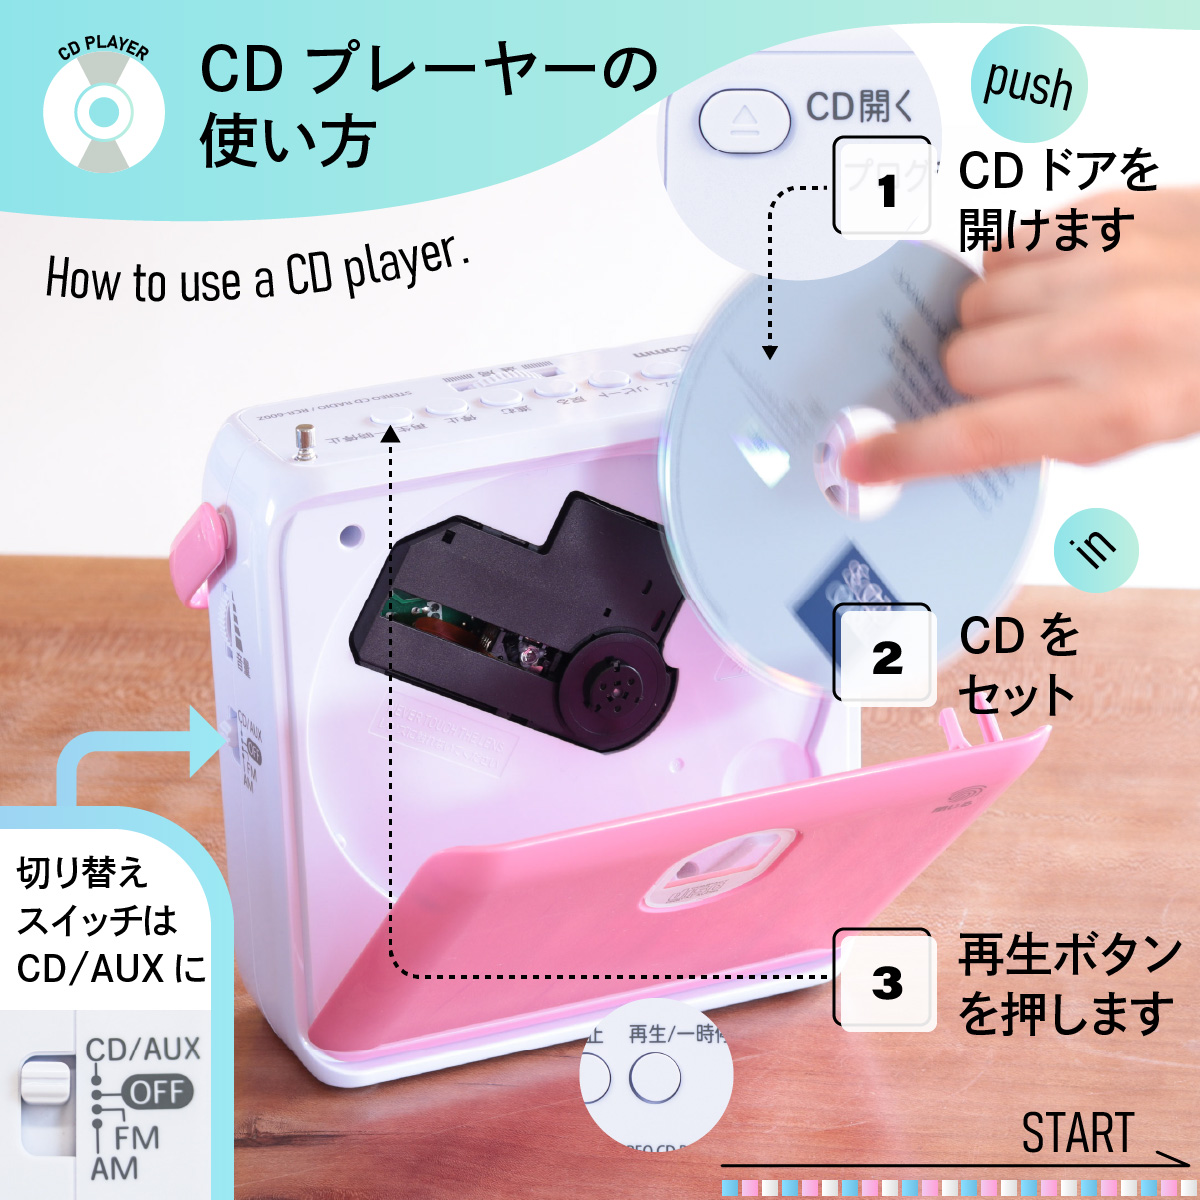 CD player stereo CD radio Cubic design AudioComm pink lRCR-600Z-P 03-5025 ohm electro- machine 